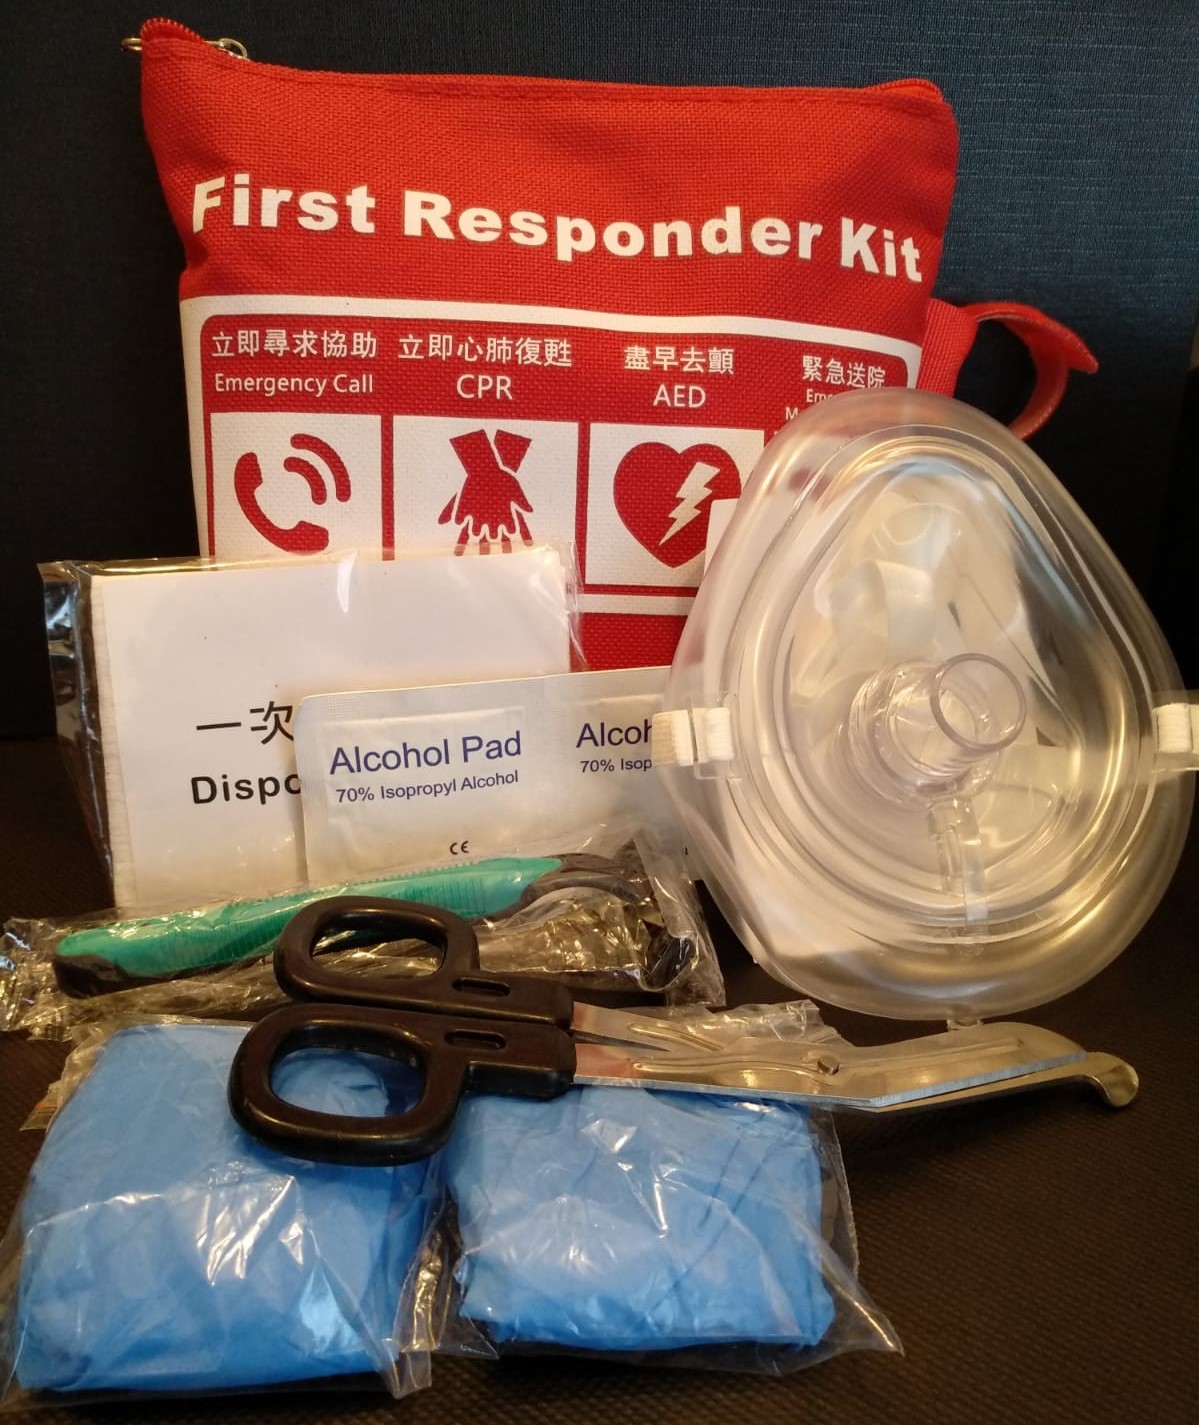 First responder kits